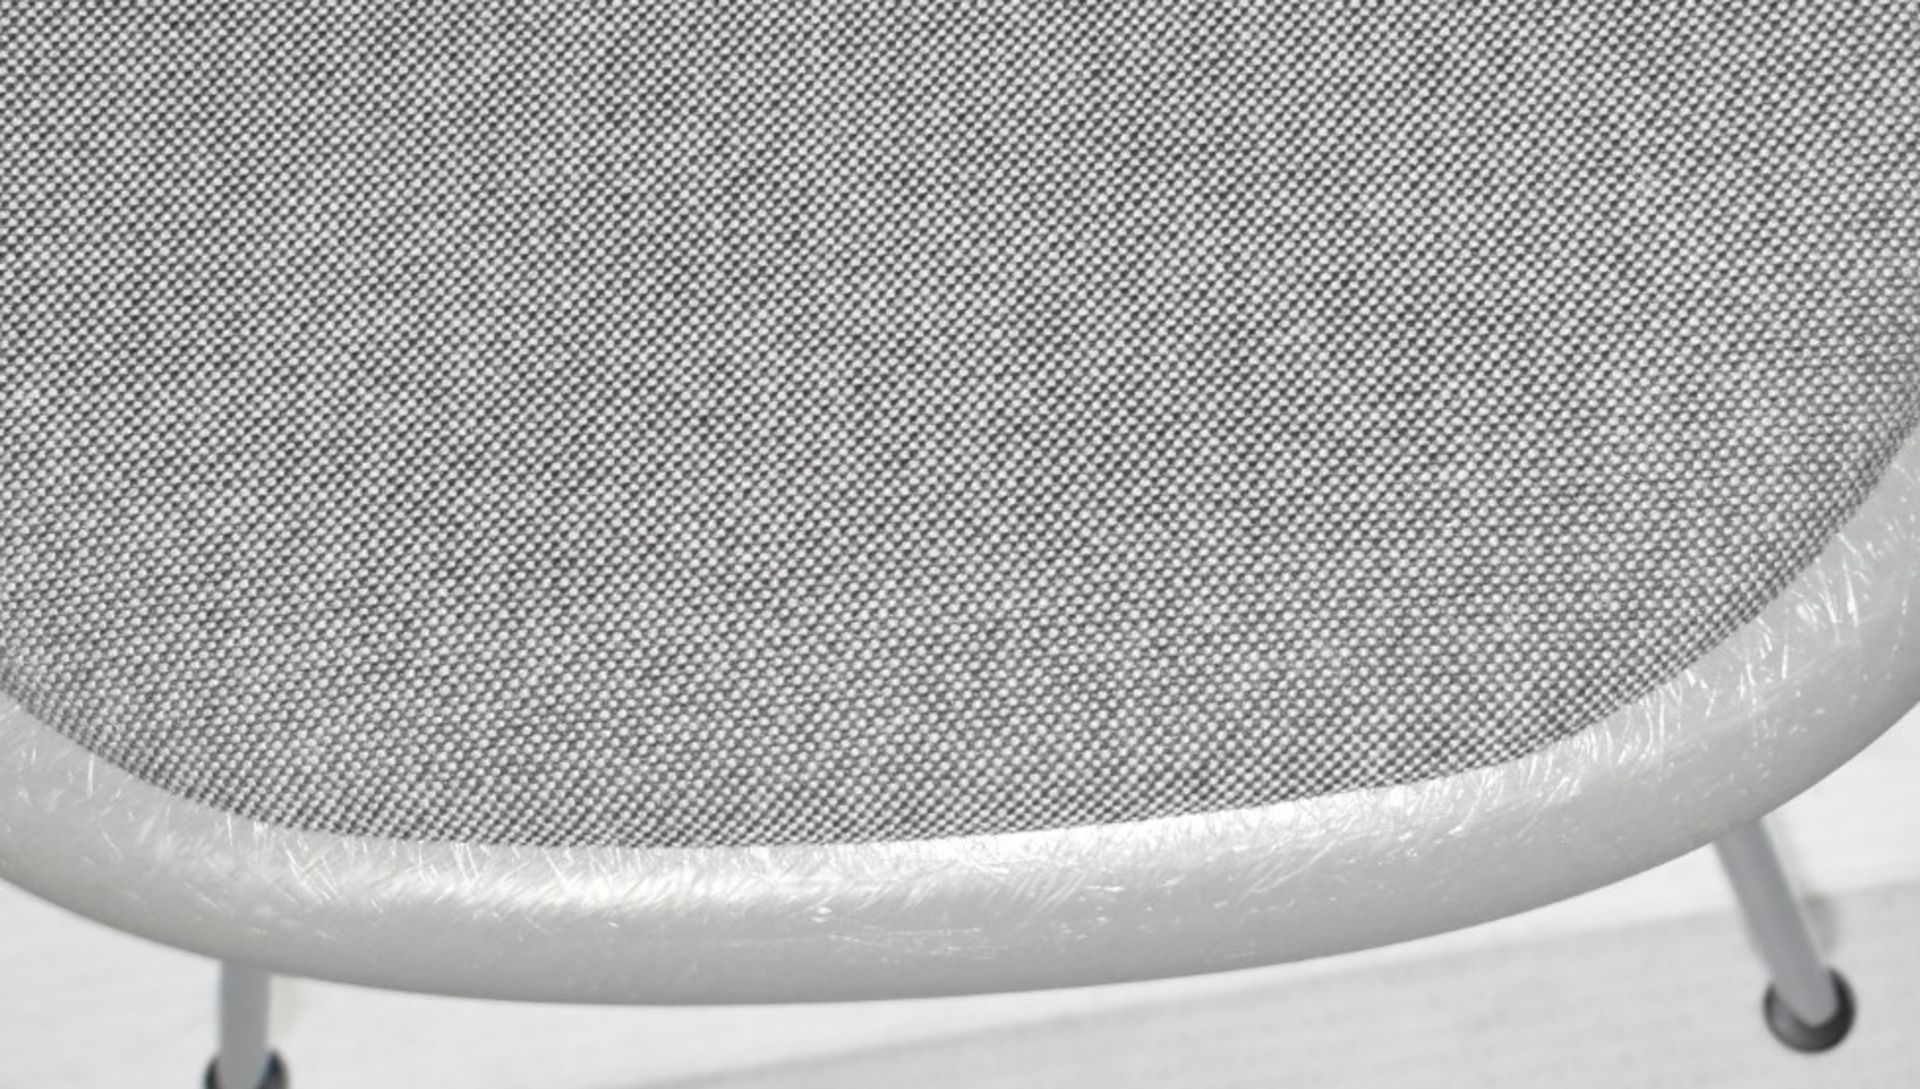 1 x VITRA Eames DSX Designer Fibreglass Chair in Grey - Original RRP £615.00 - Image 11 of 13